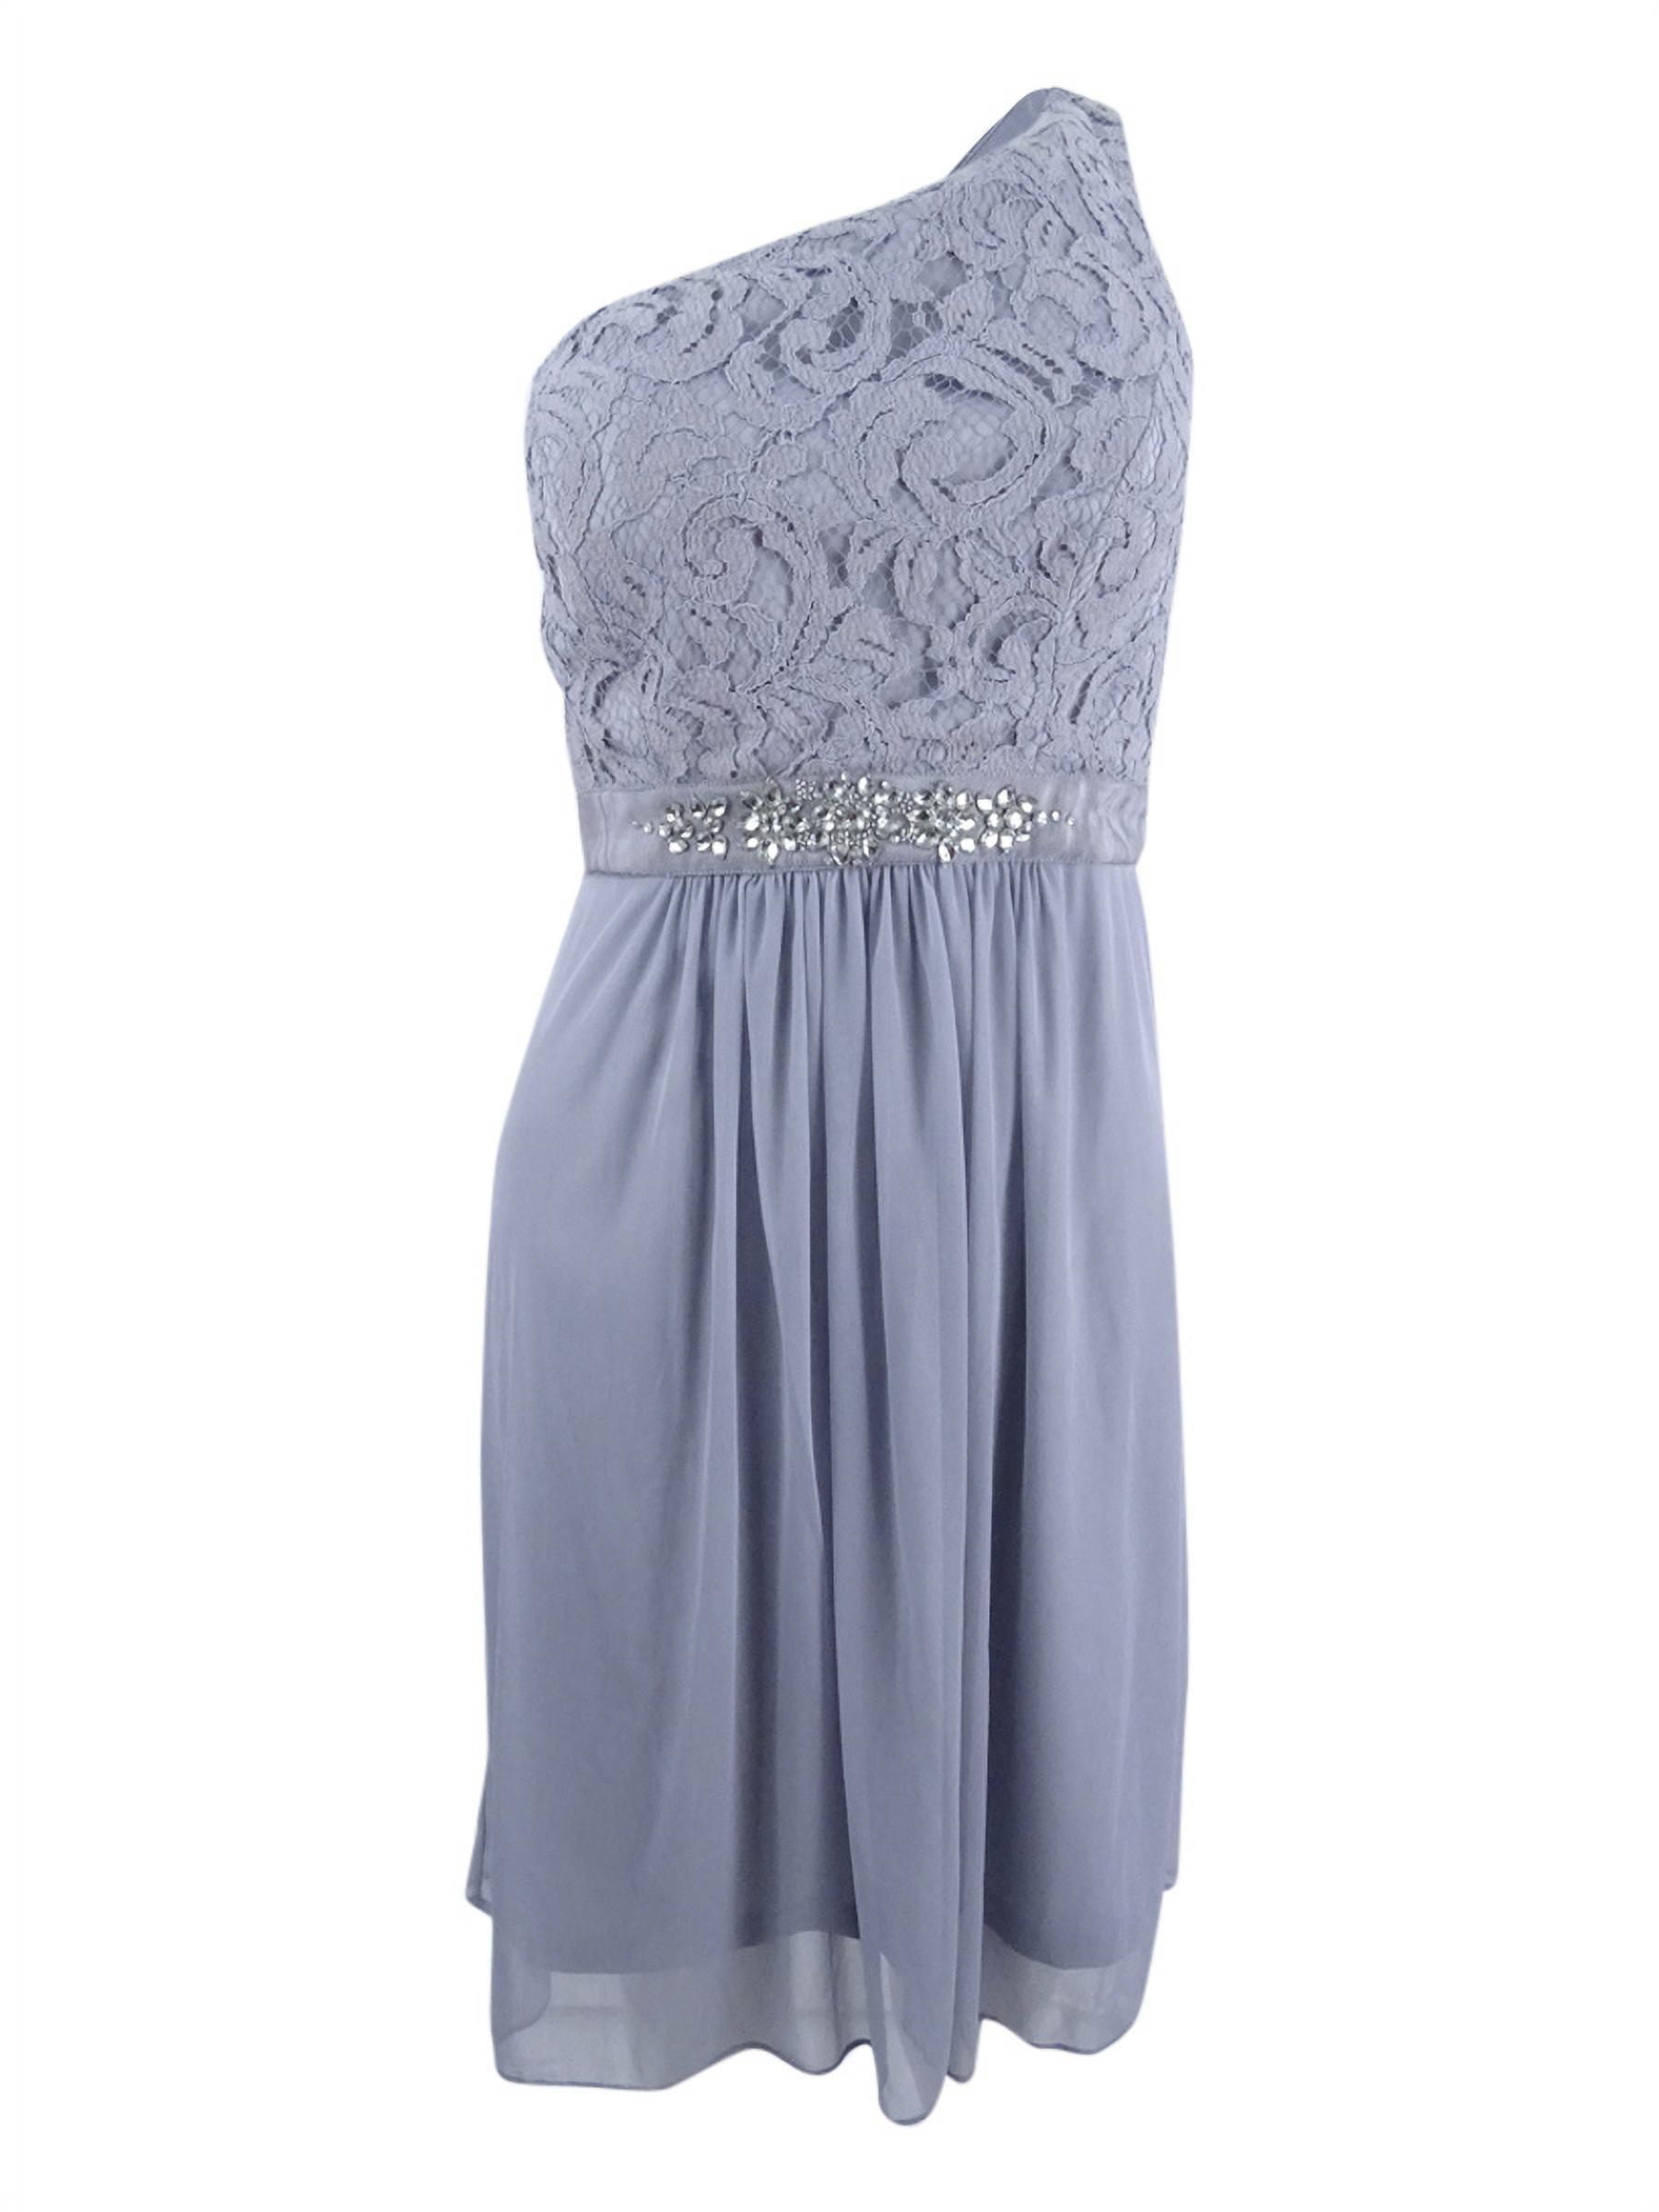 Adrianna Papell Women's One-Shoulder Lace Dress (20, Silver) - Walmart.com